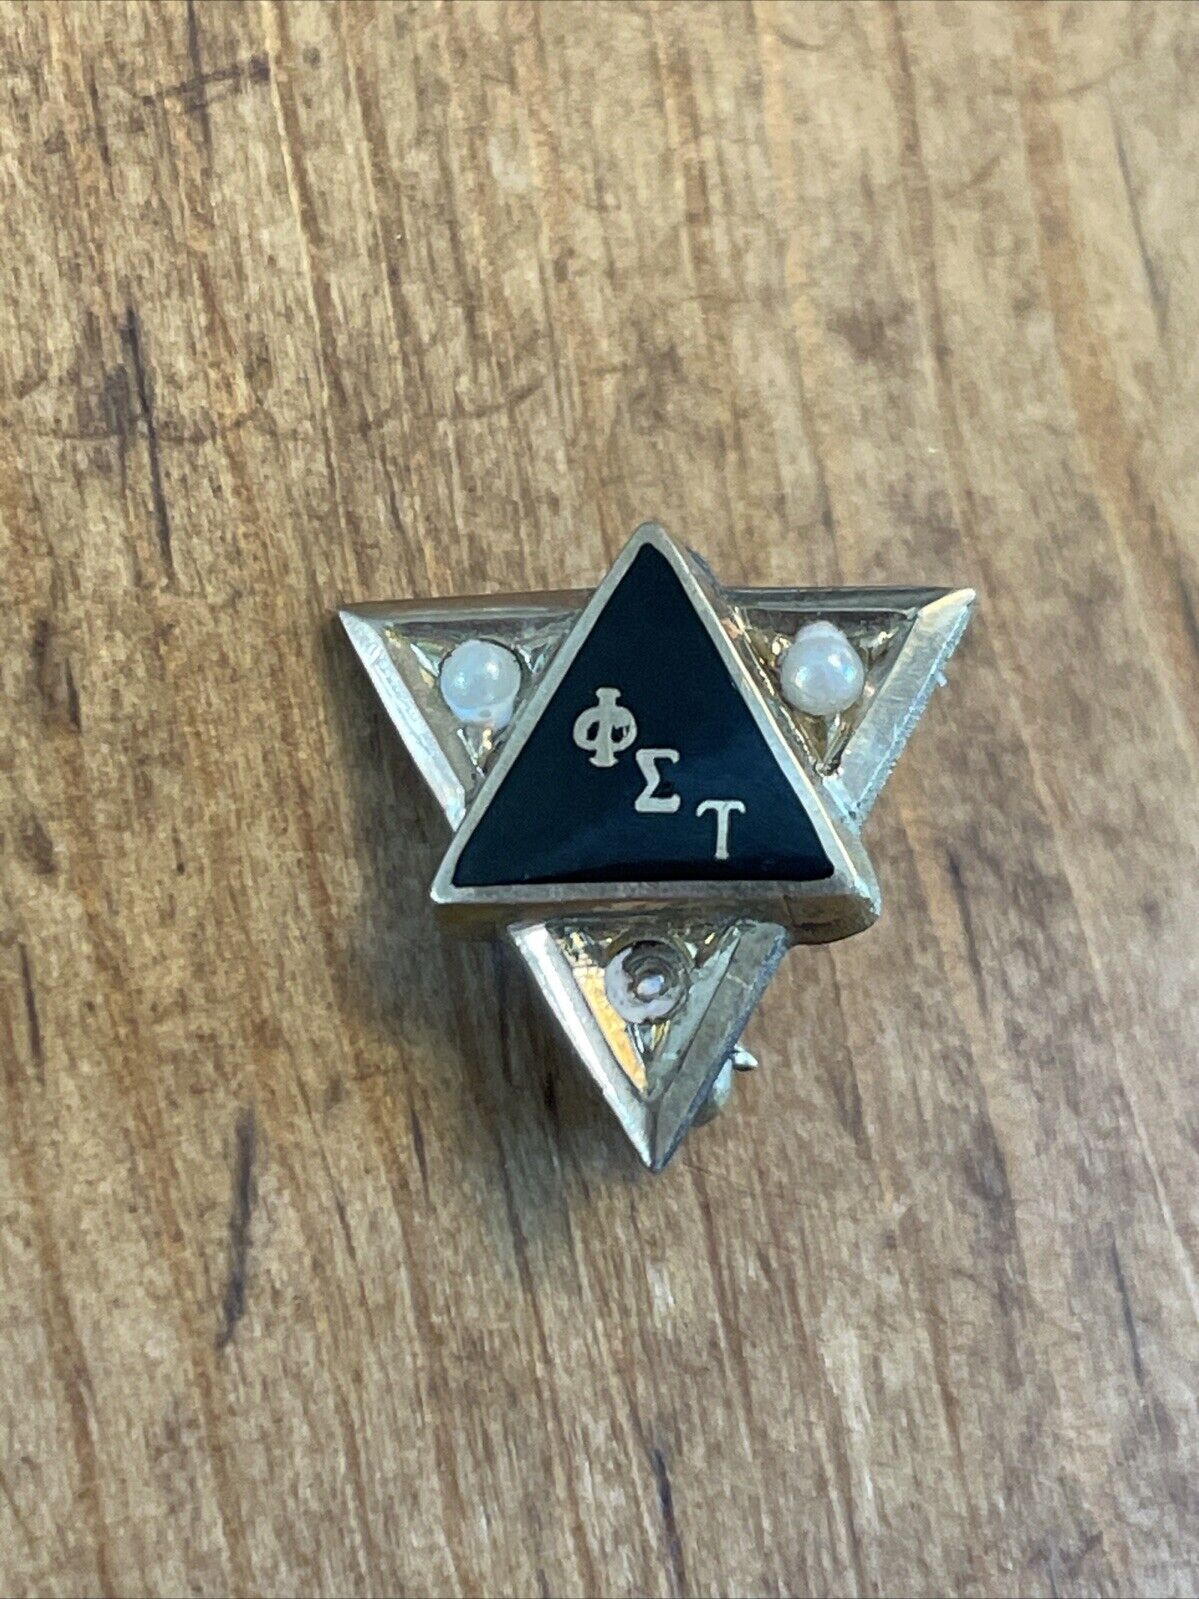 Vintage Phi Sigma Tau Fraternity Sorority Pin